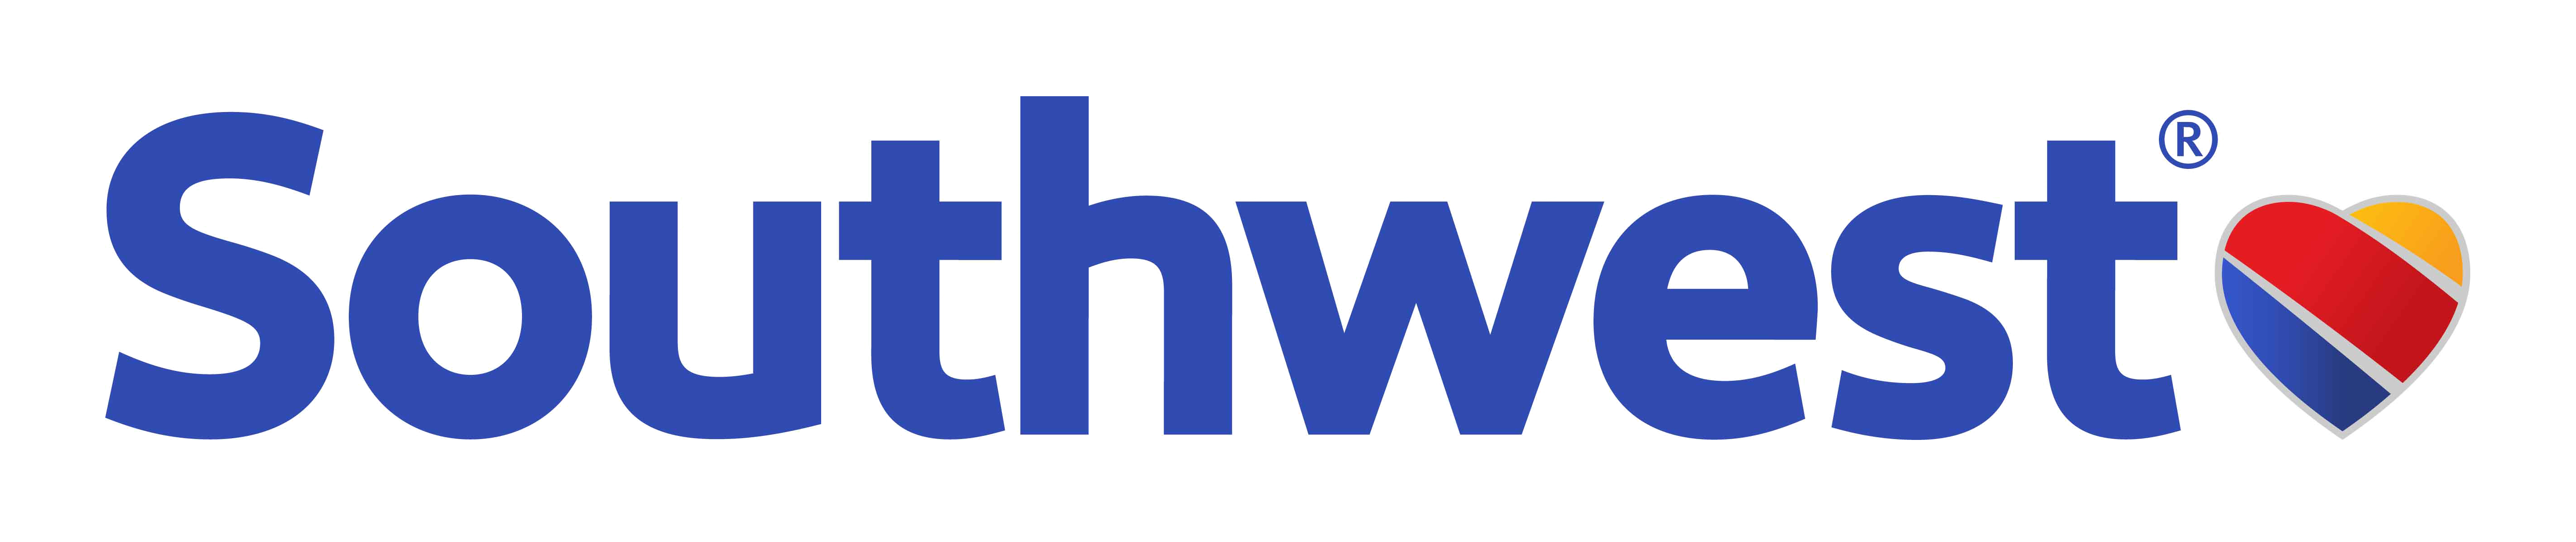 Southwest Airline Brand Logo